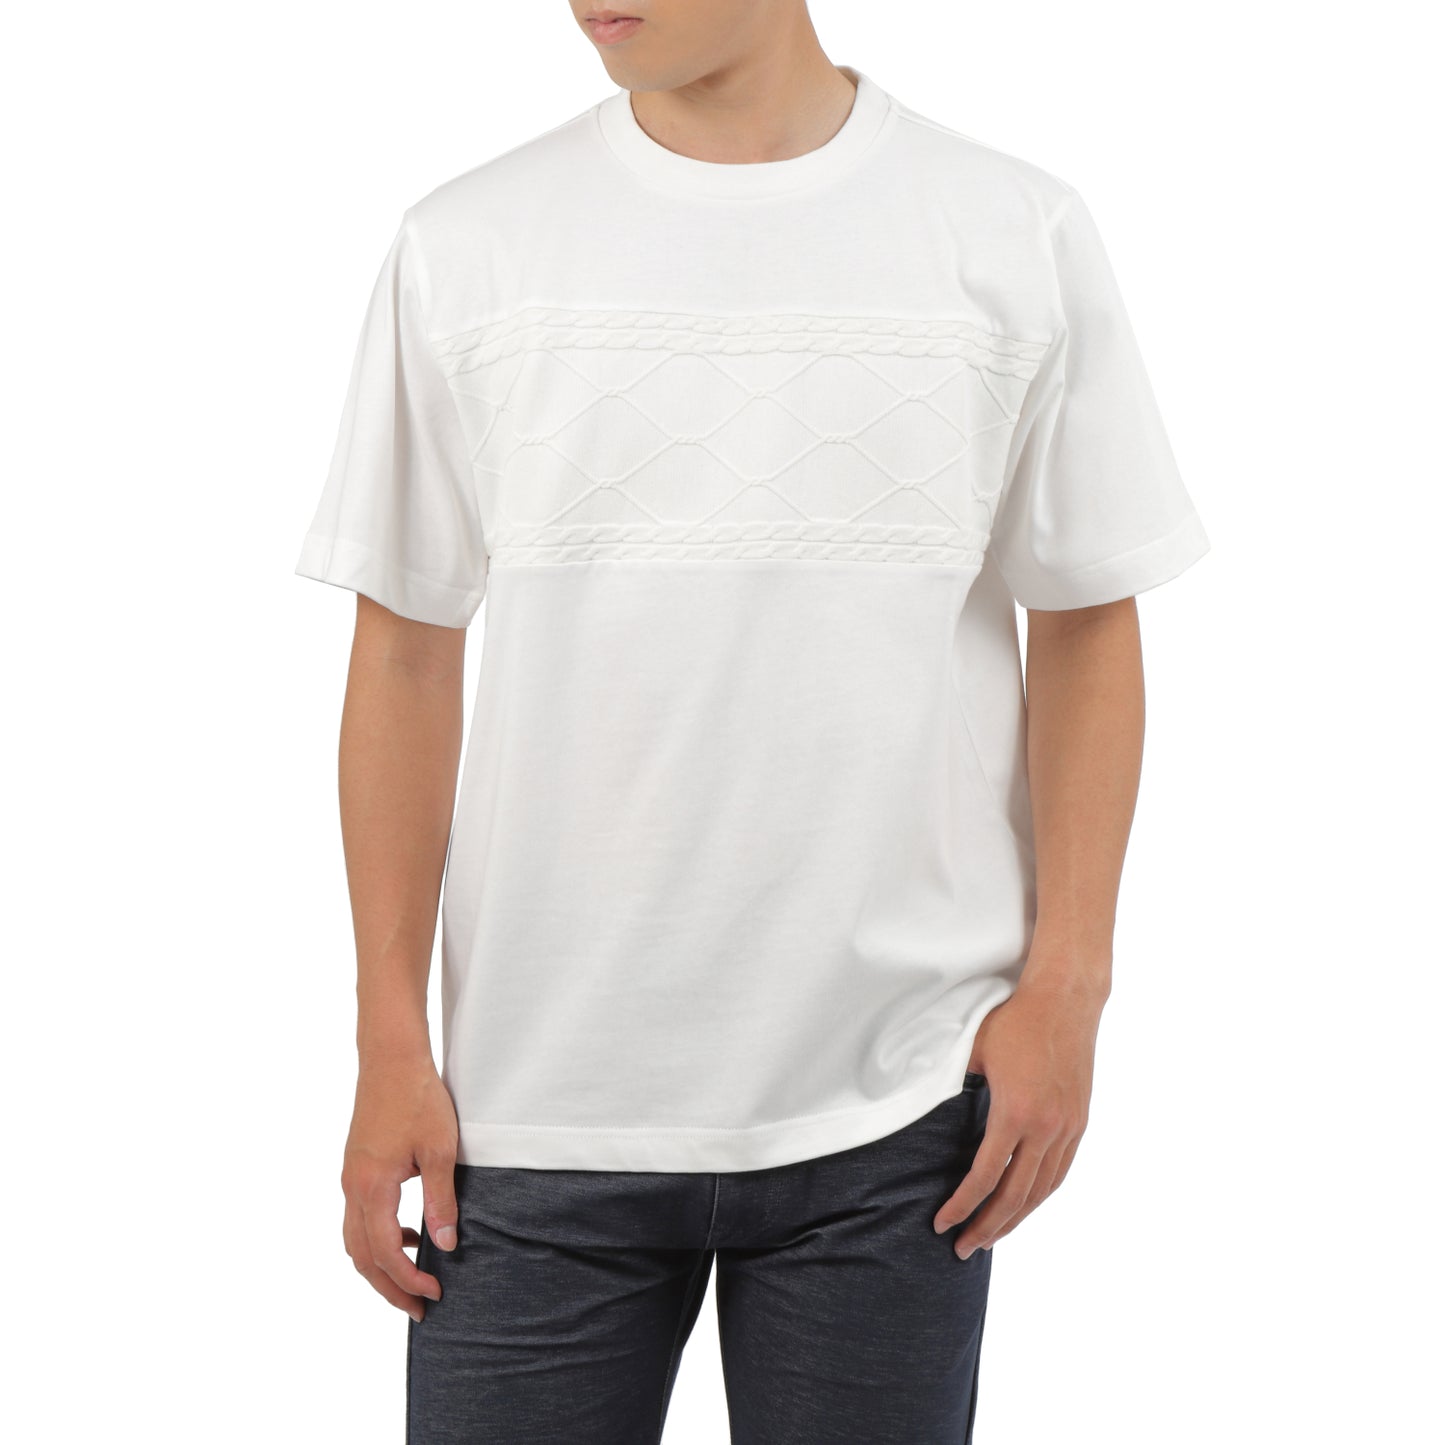 【SALE／50％OFF】VUMPS 前身ニットボーダーTシャツ (WHITE / BLACK)